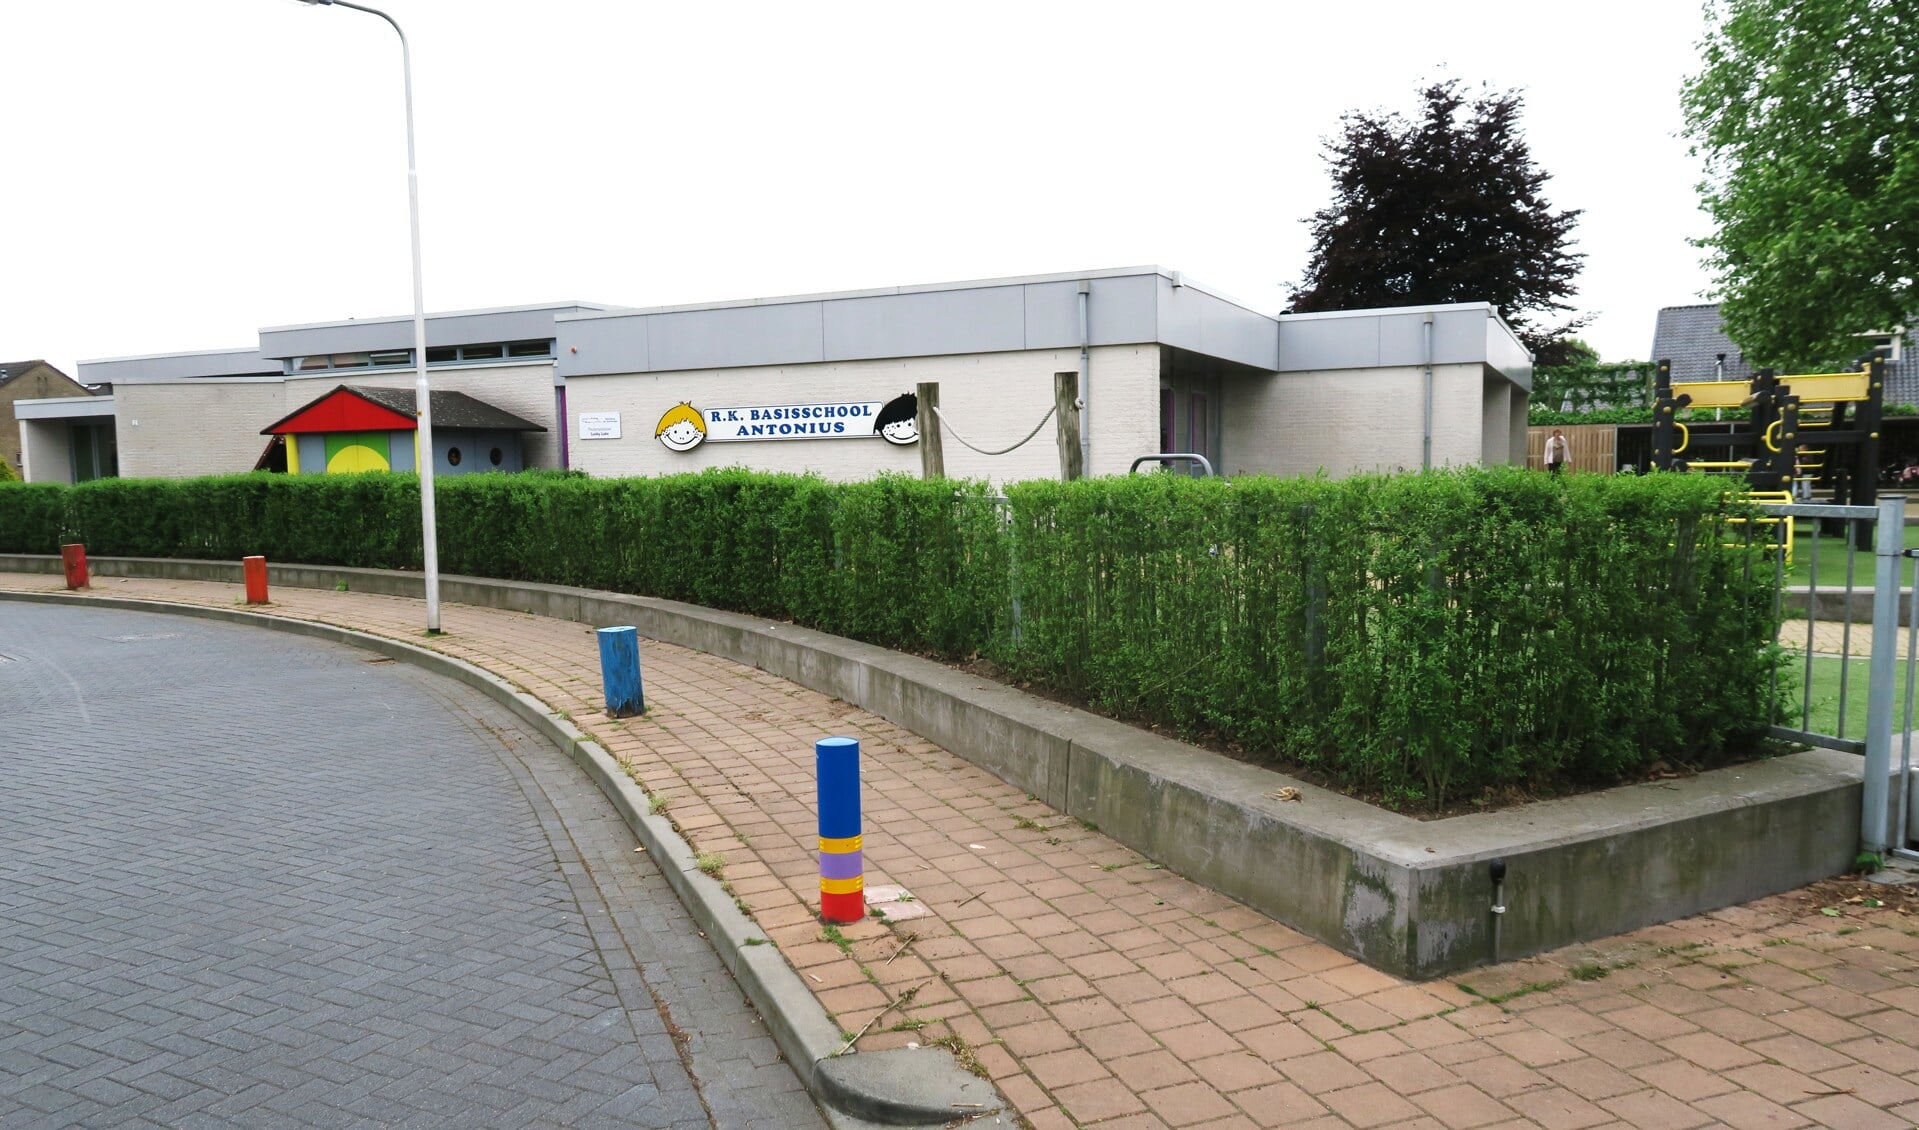 De basisschool Antonius in Lievelde, die ook onder druk is komen te staan. Foto: Theo Huijskes